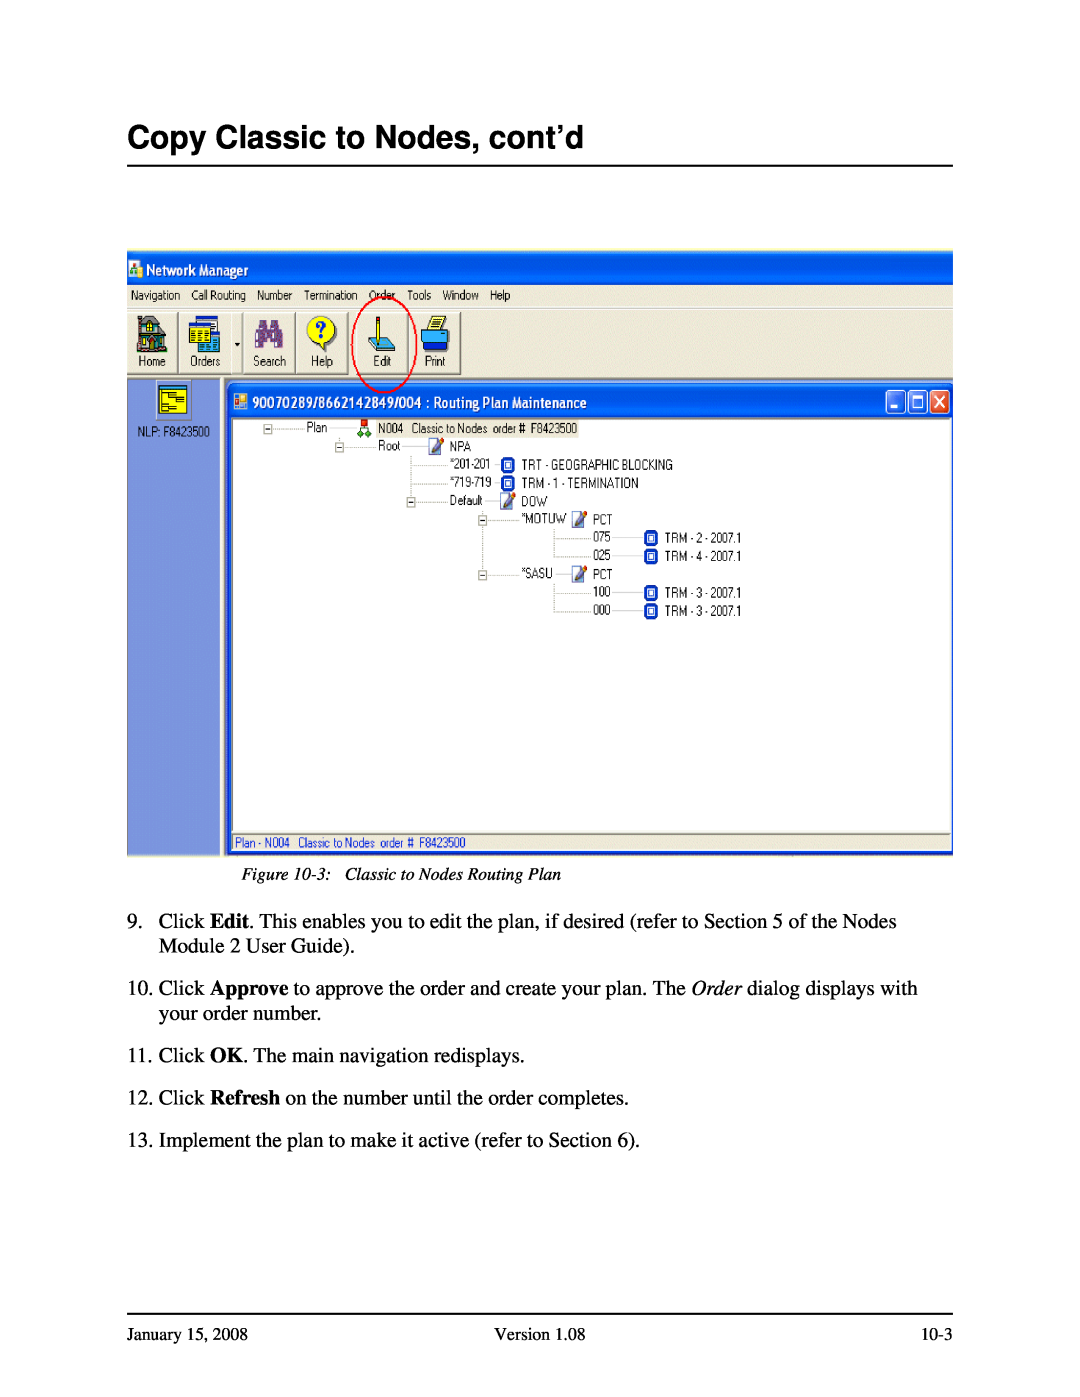 Verizon Network Manager Nodes manual Copy Classic to Nodes, cont’d, Click OK. The main navigation redisplays 